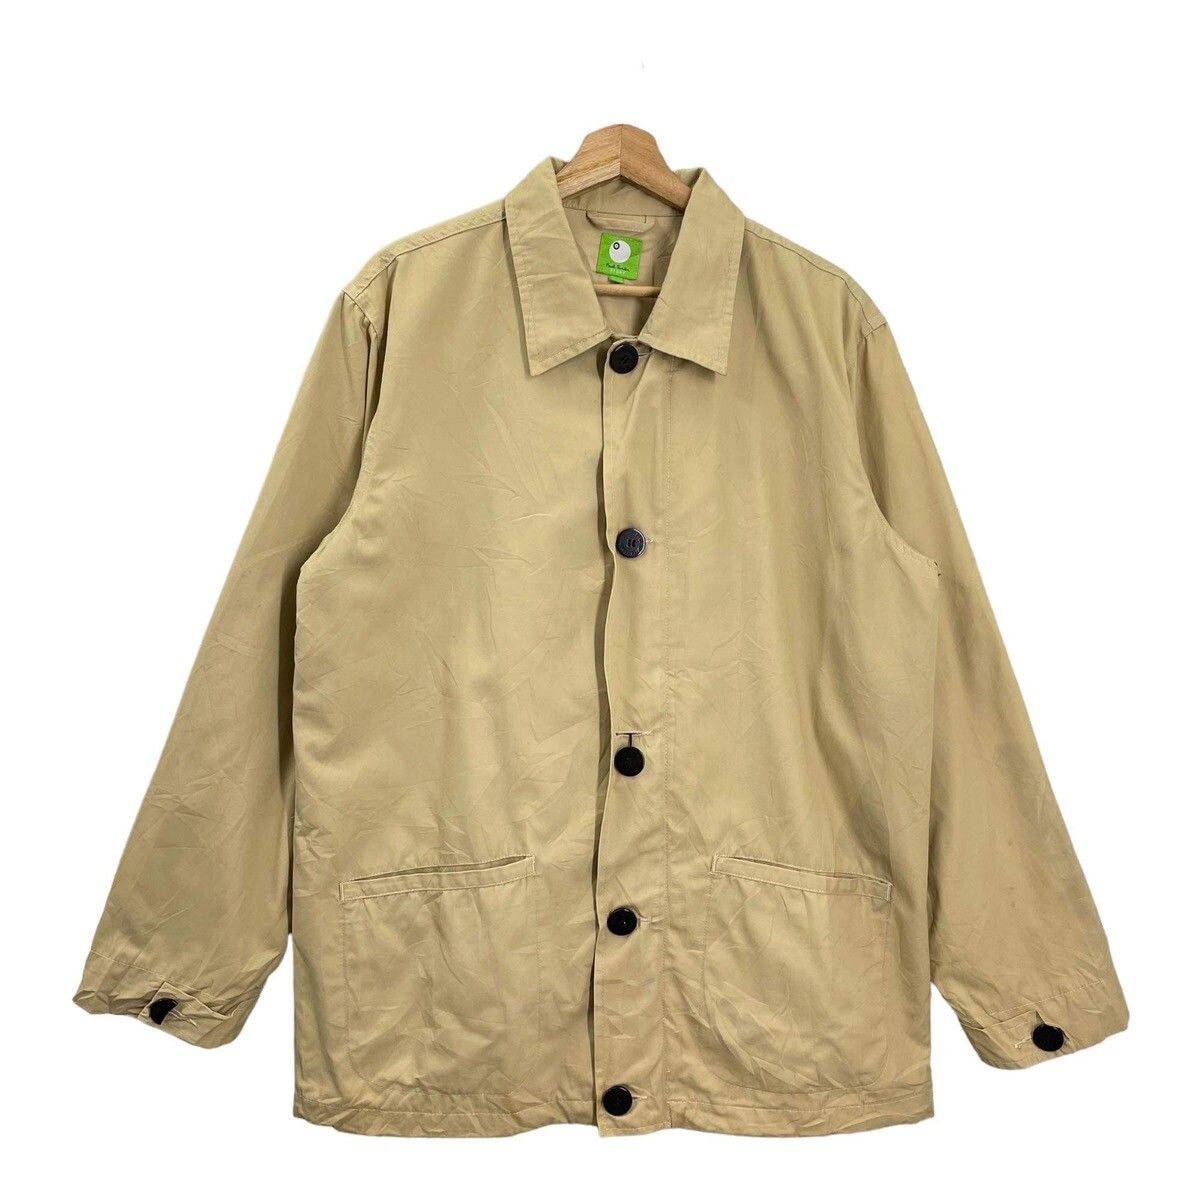 Paul Smith Button Jacket Size M - 1